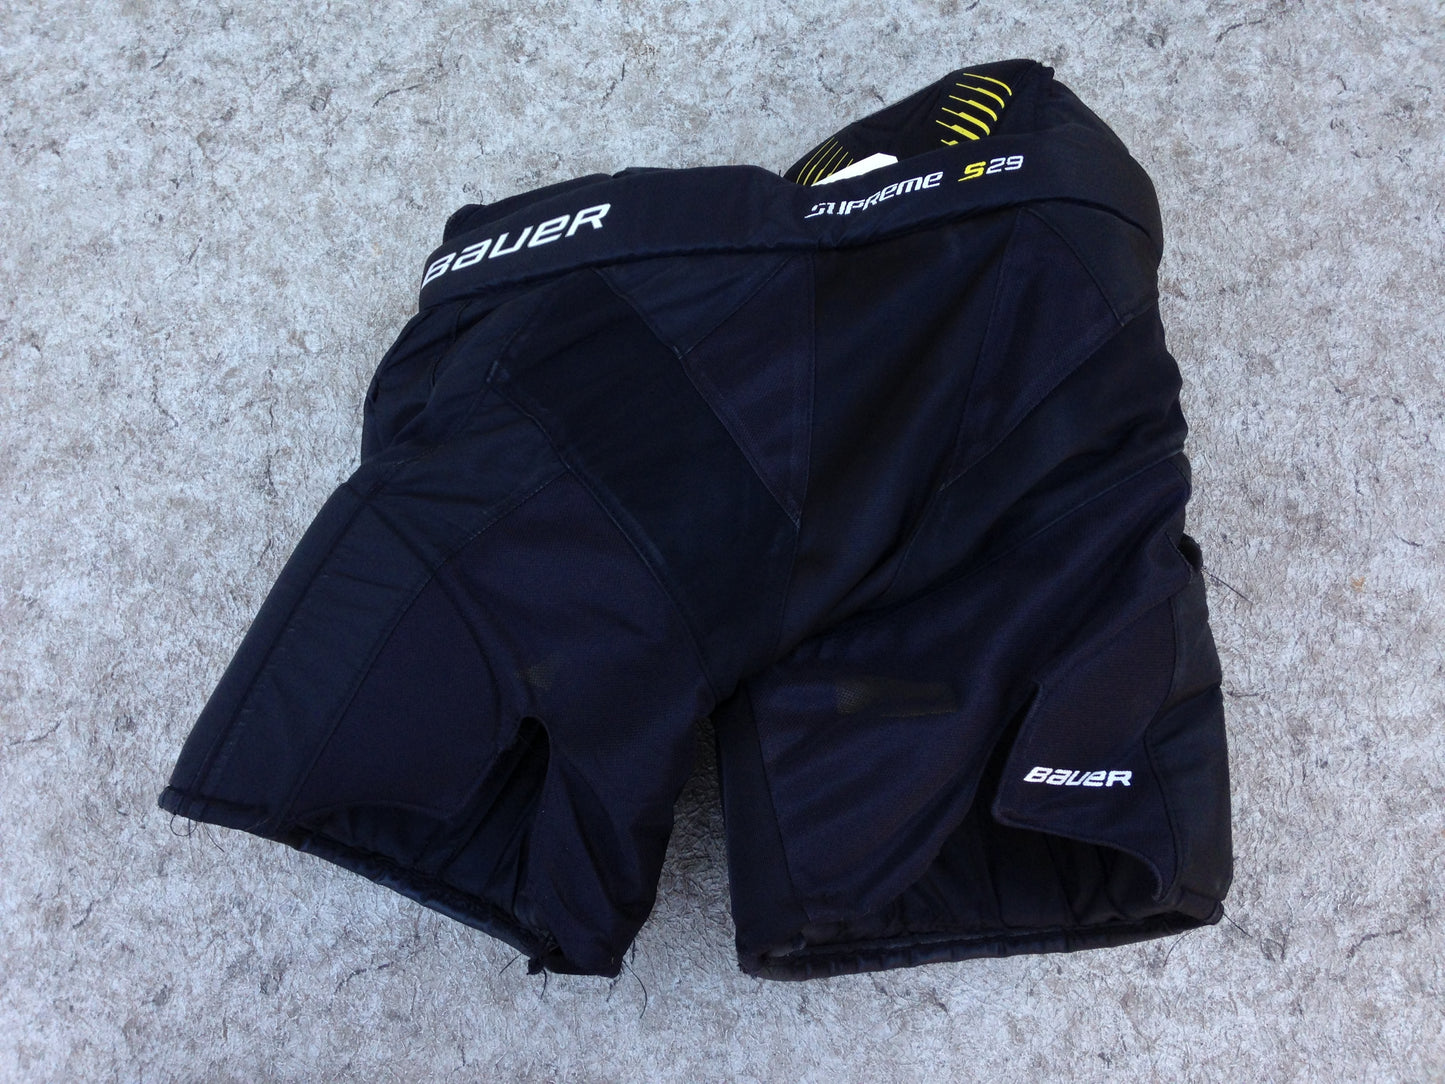 Hockey Goalie Pants Child Size Junior Intermediate Bauer Supreme S29 Black Yellow Excellent